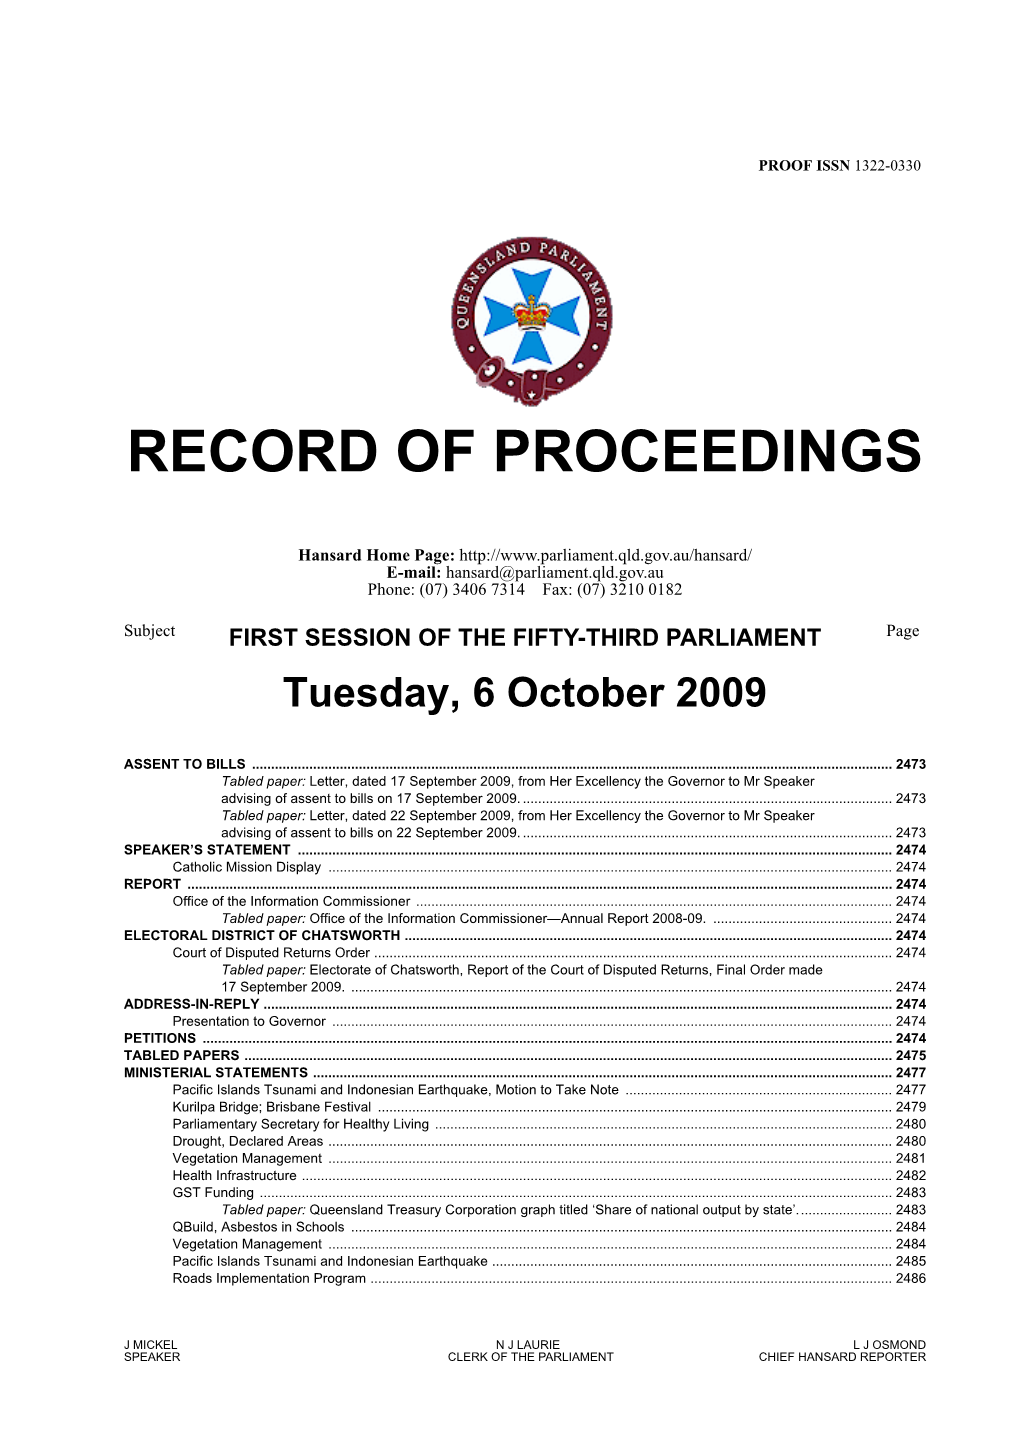 Final Order Made 17 September 2009